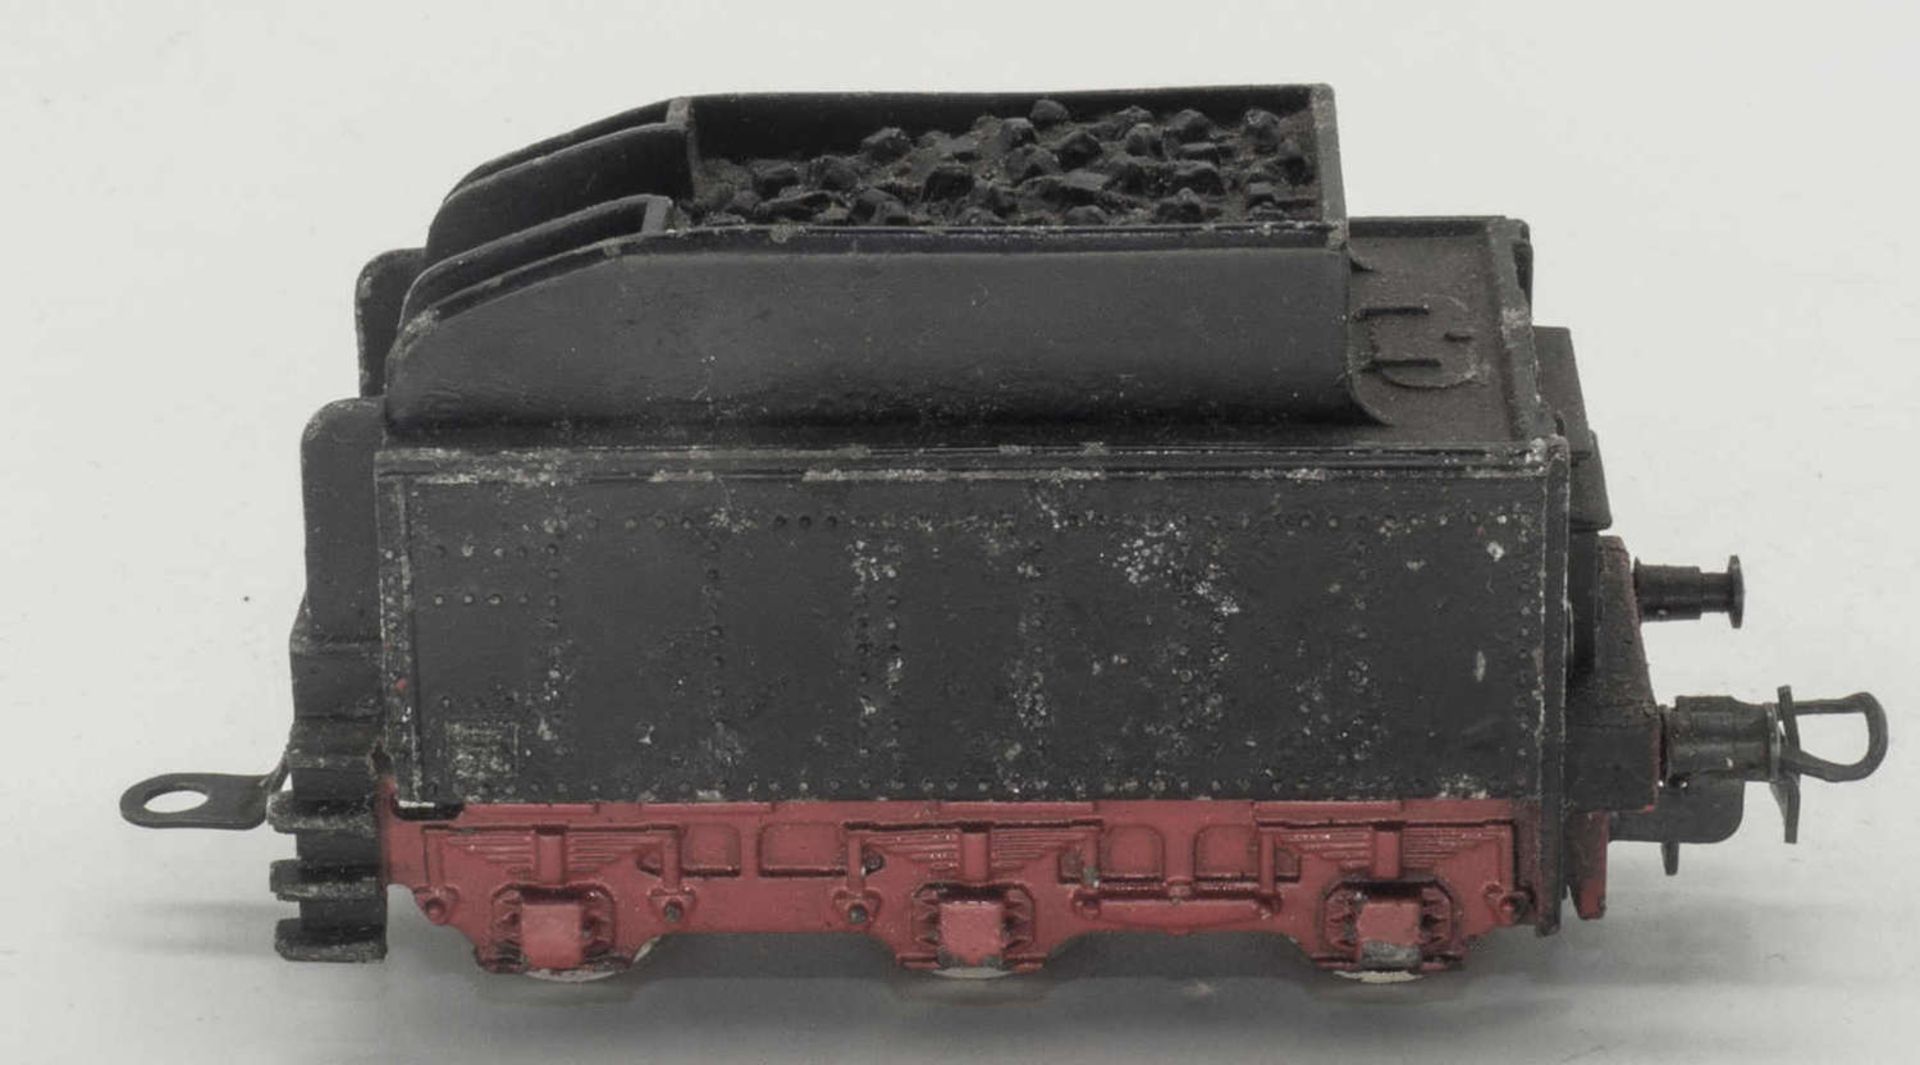 Märklin RM 800, Dampflokomotive mit Schlepptender, Guss, Spur H0, gebraucht.Märklin RM 800, steam - Bild 6 aus 8